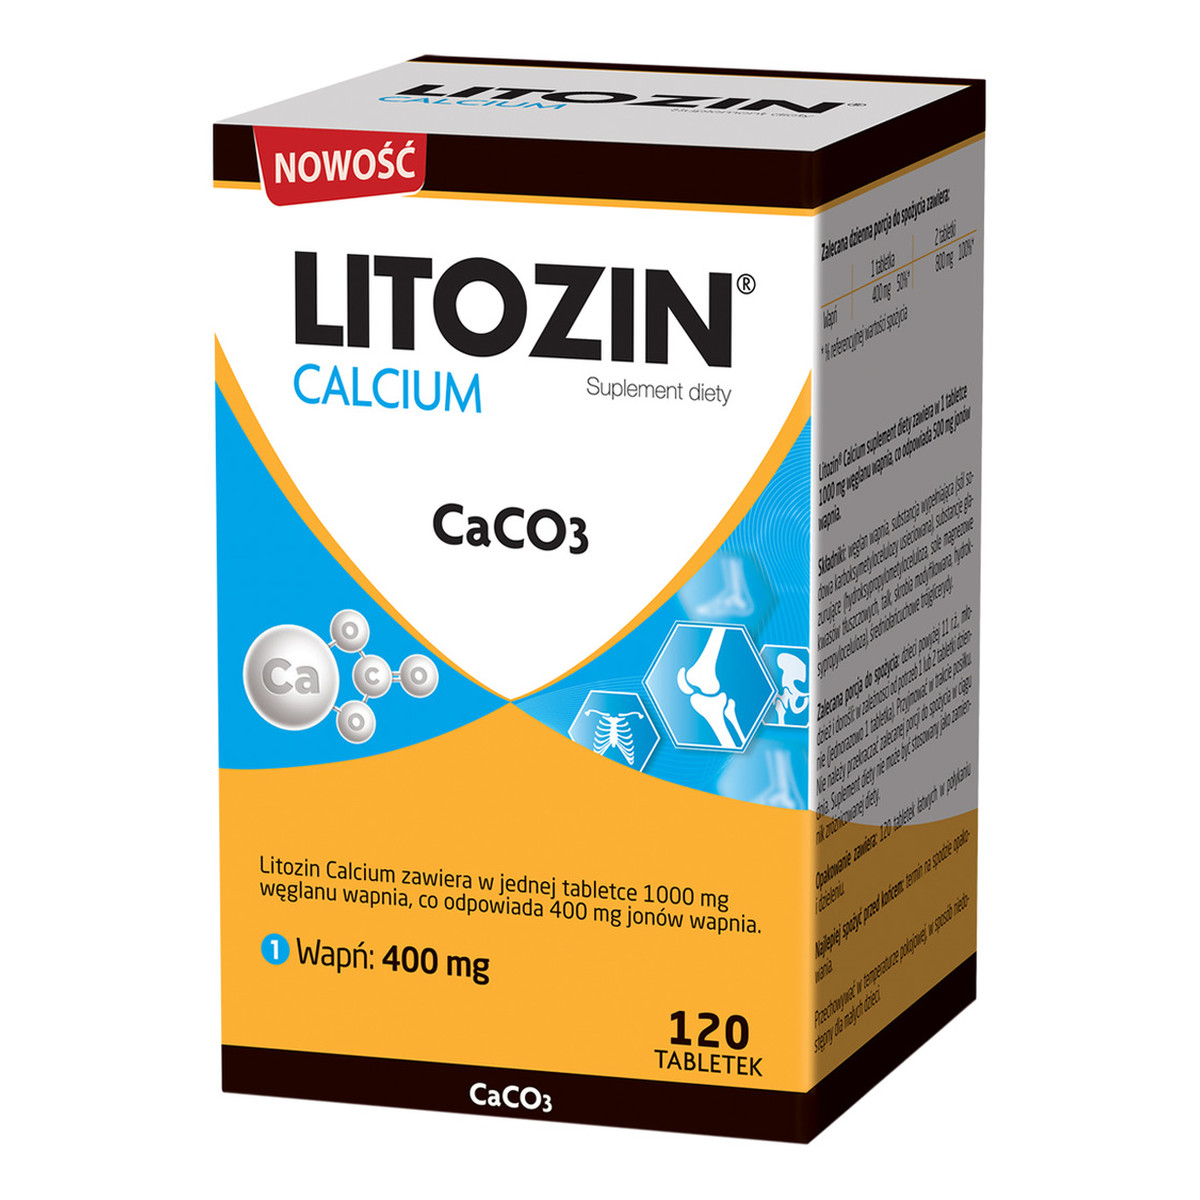 Litozin Calcium caco3 suplement diety 120 tabletek